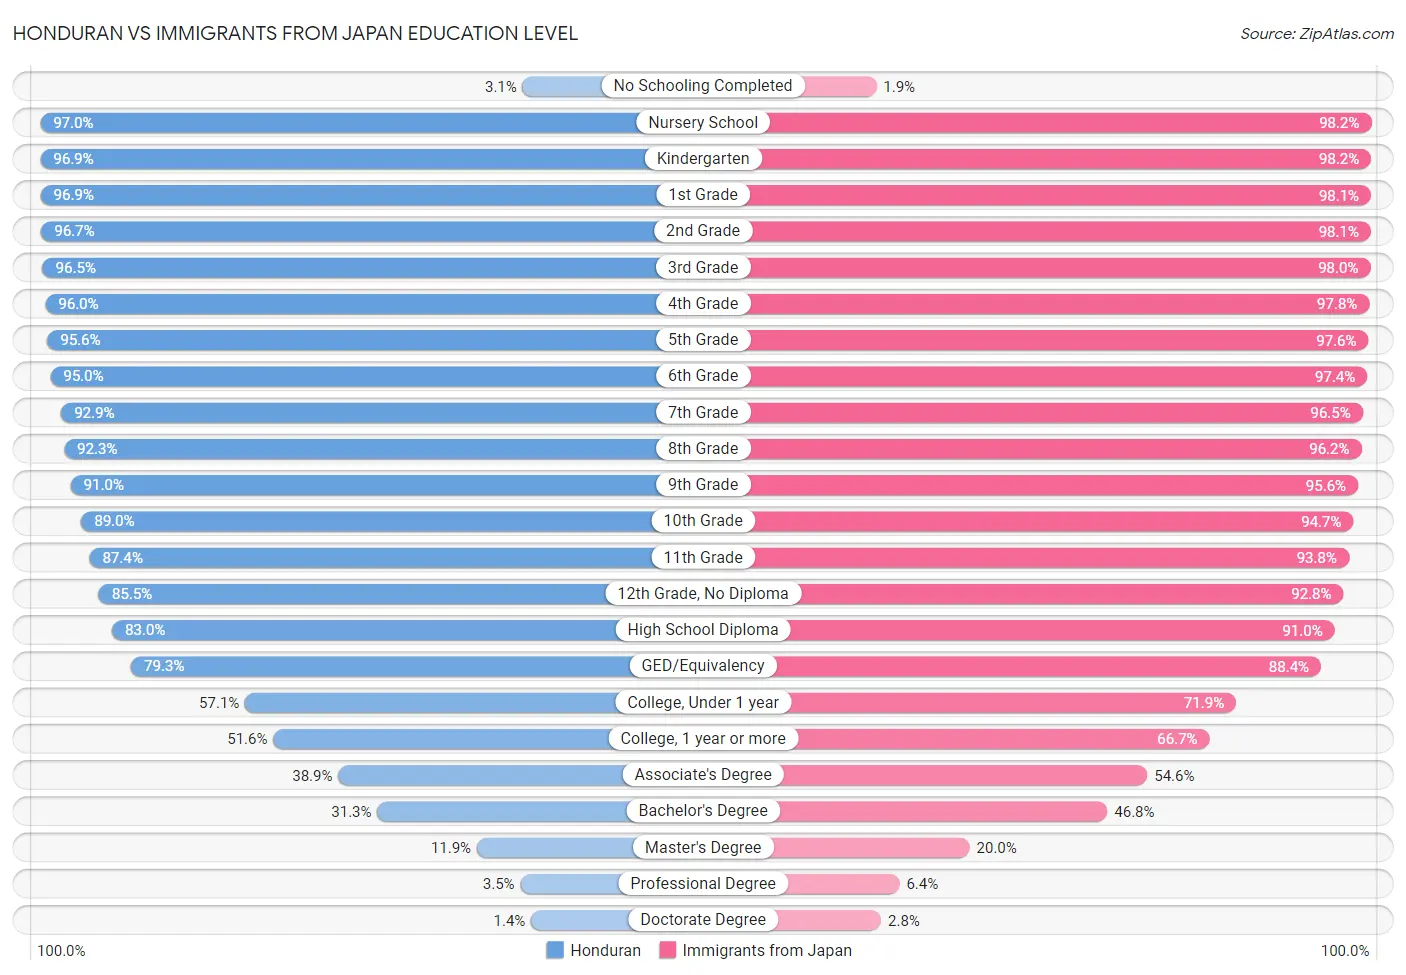 Honduran vs Immigrants from Japan Education Level